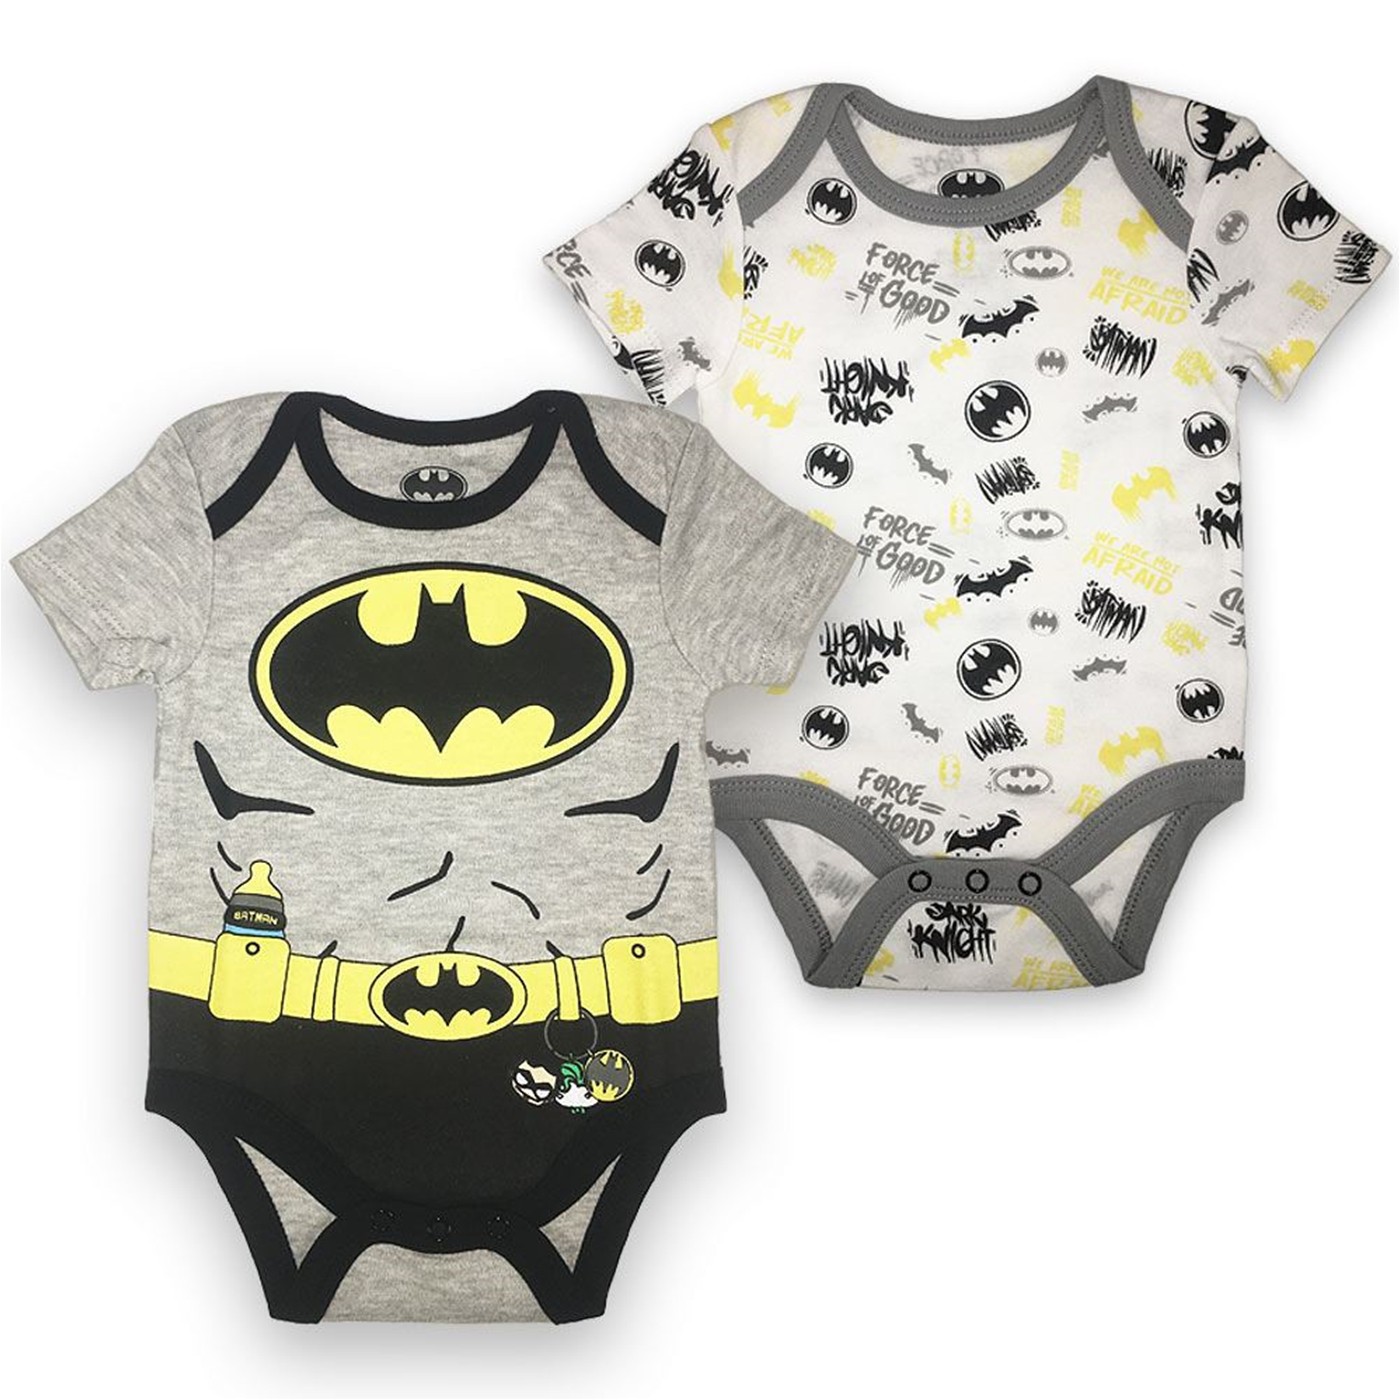 Batman Costume and Symbols 2-Pack Infant Bodysuit Set